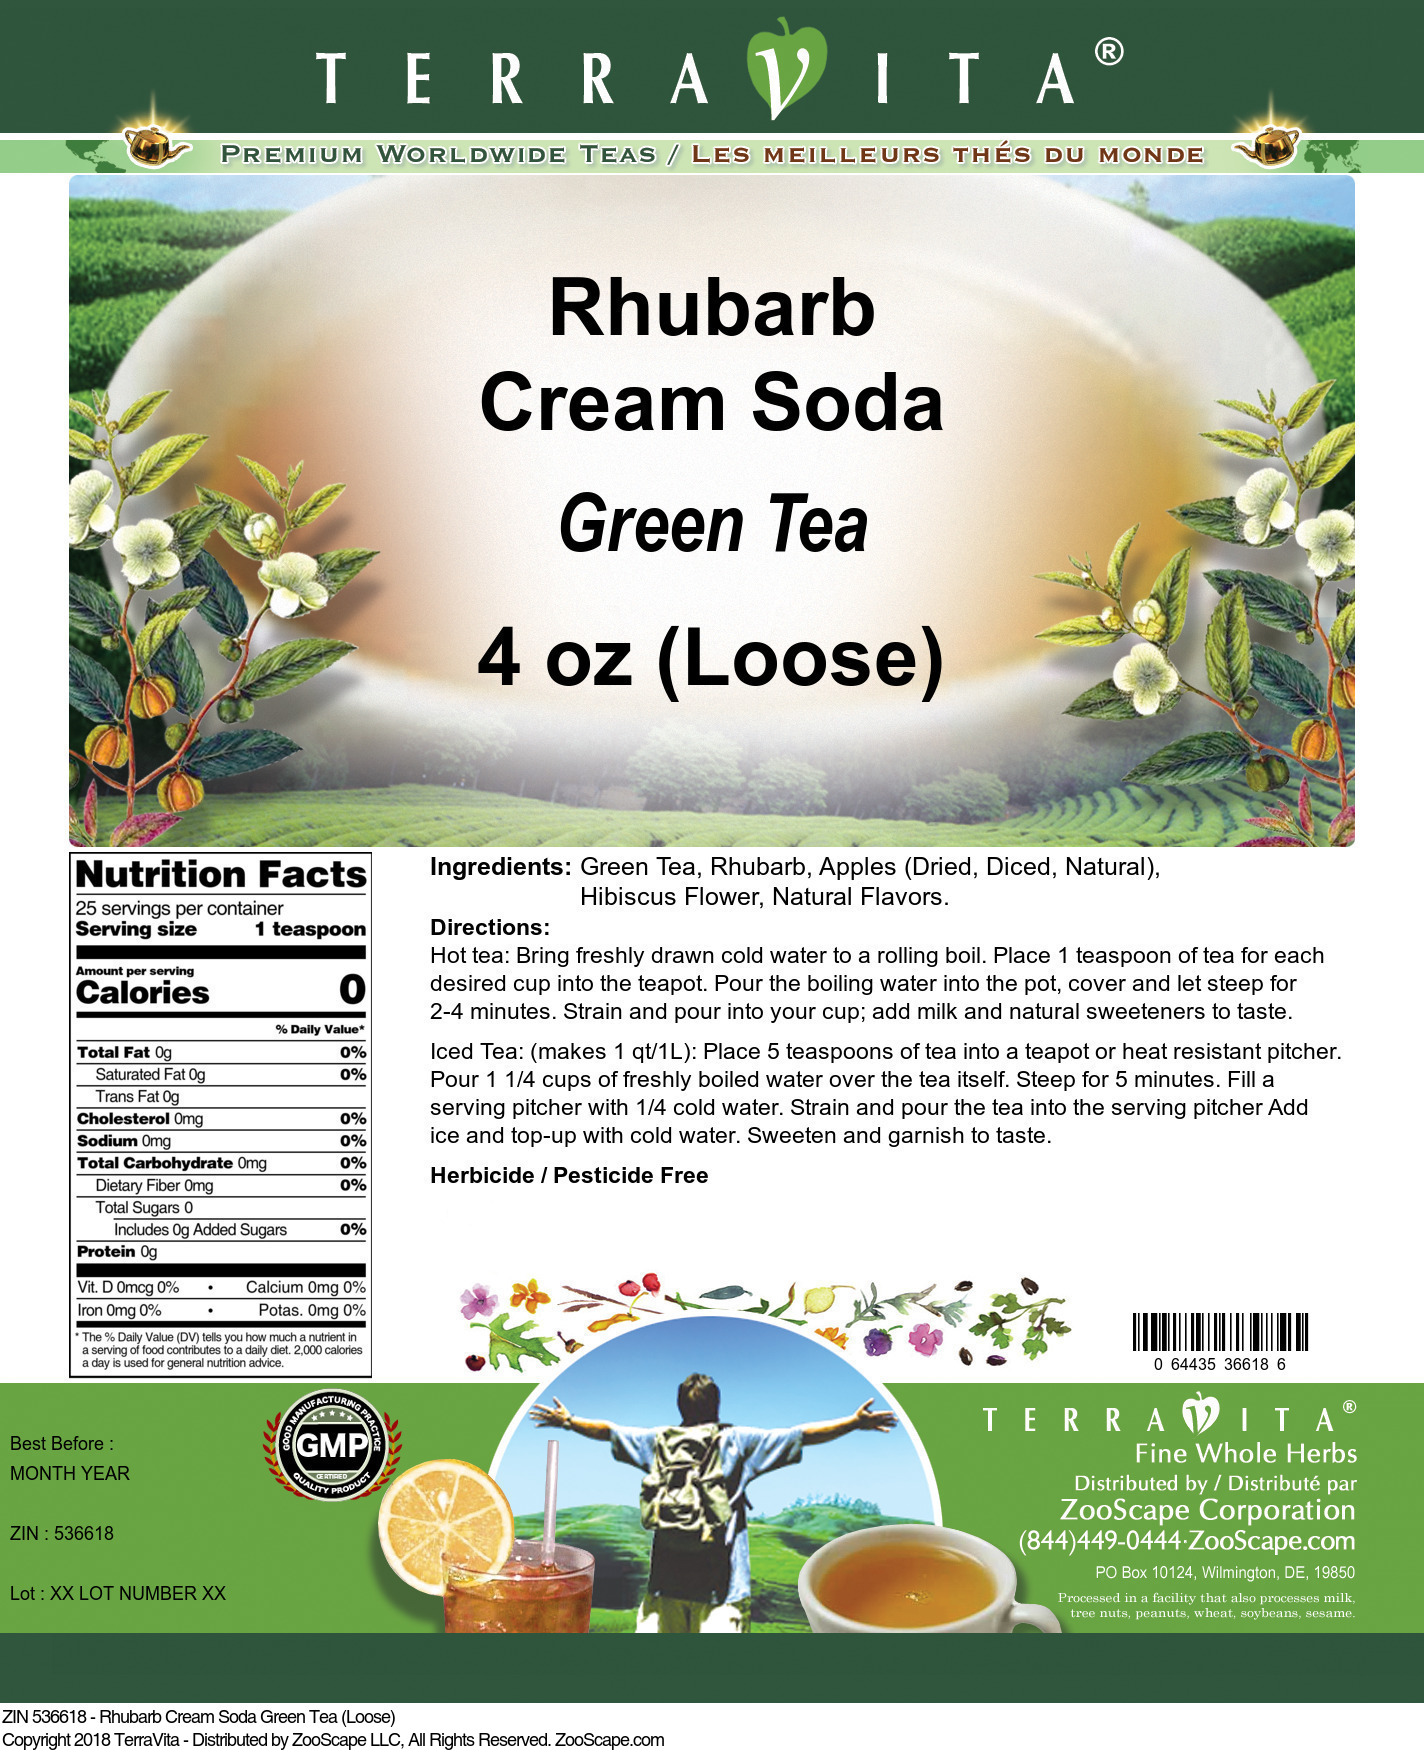 Rhubarb Cream Soda Green Tea (Loose) - Label